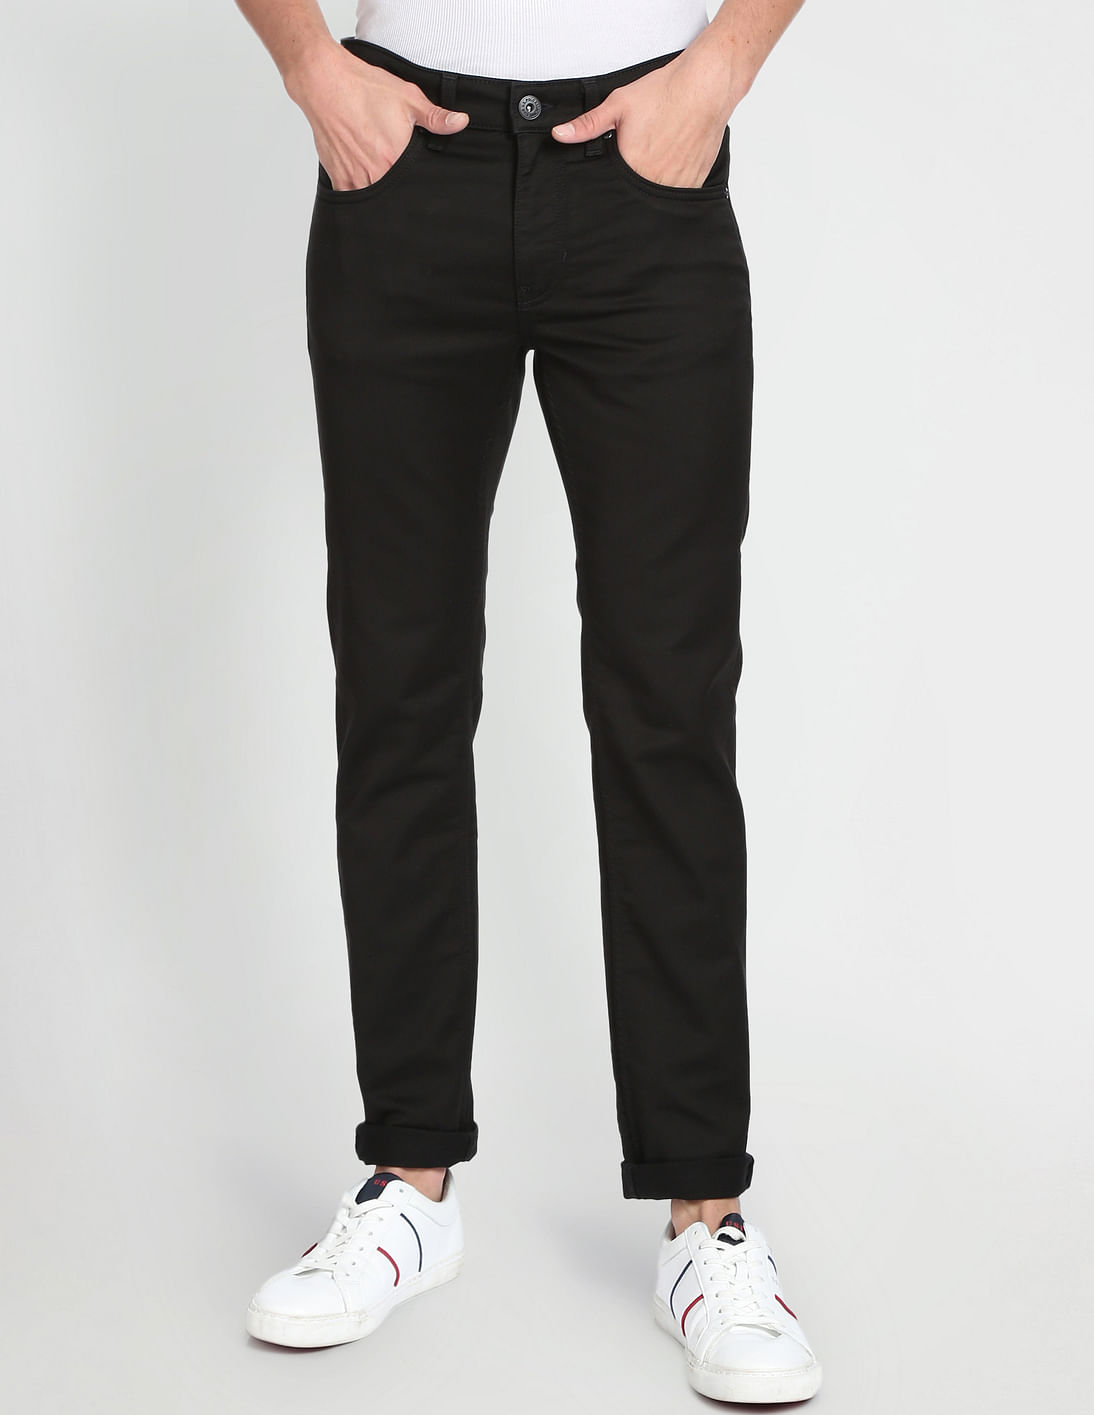 Buy U.S. Polo Assn. Denim Co. Regallo Skinny Fit Black Jeans - NNNOW.com